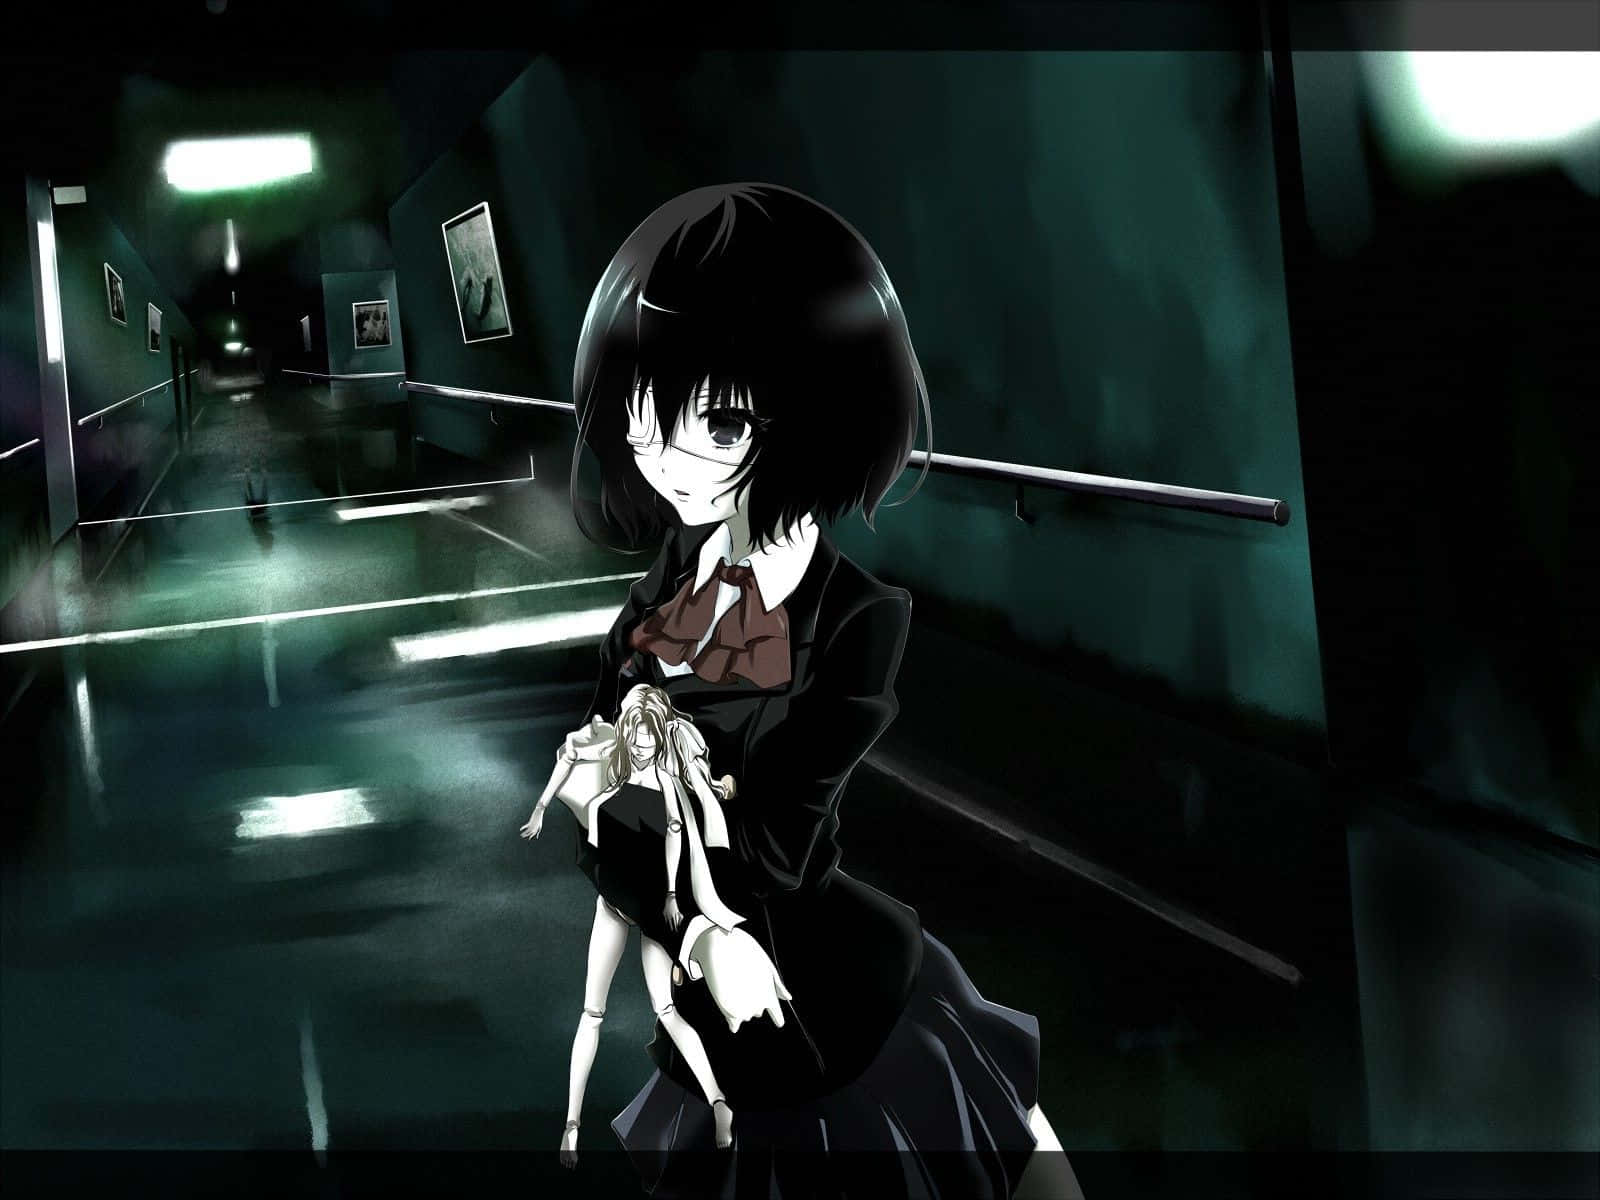 A Girl In A Dark Hallway Holding A Skeleton